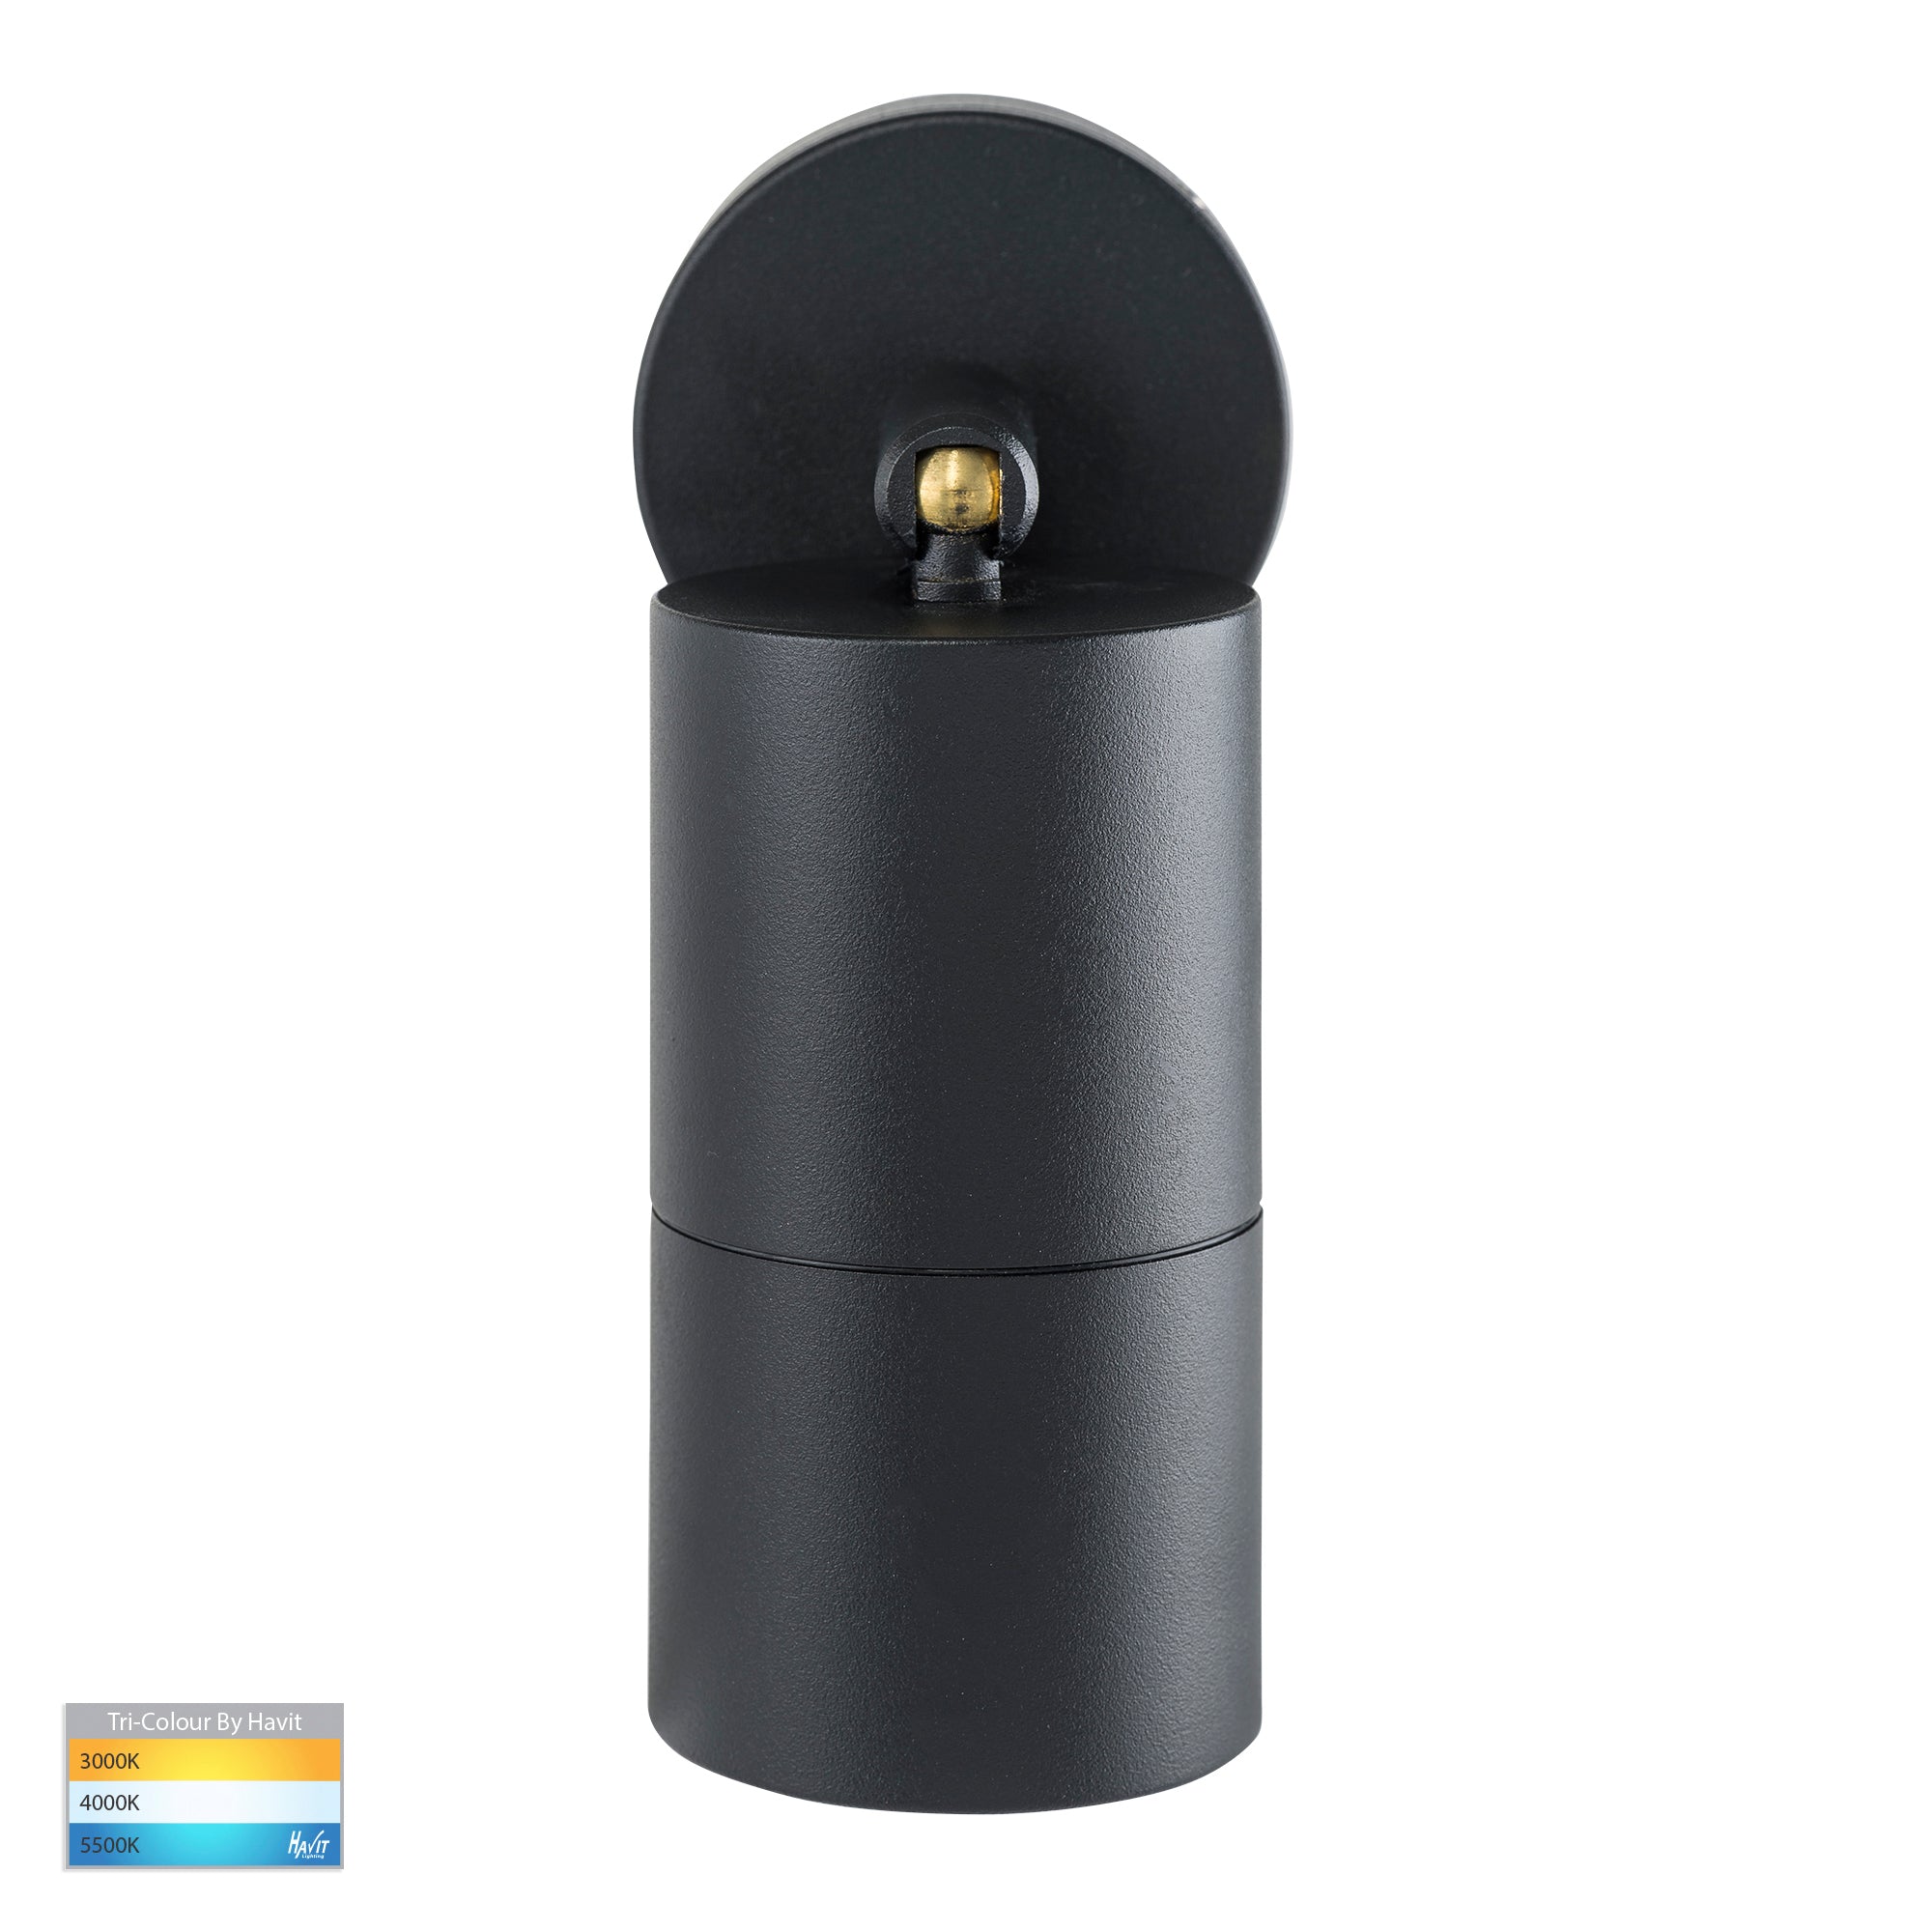 HV1225T-HV1227T - Tivah Black TRI Colour Single Adjustable Wall Pillar Lights